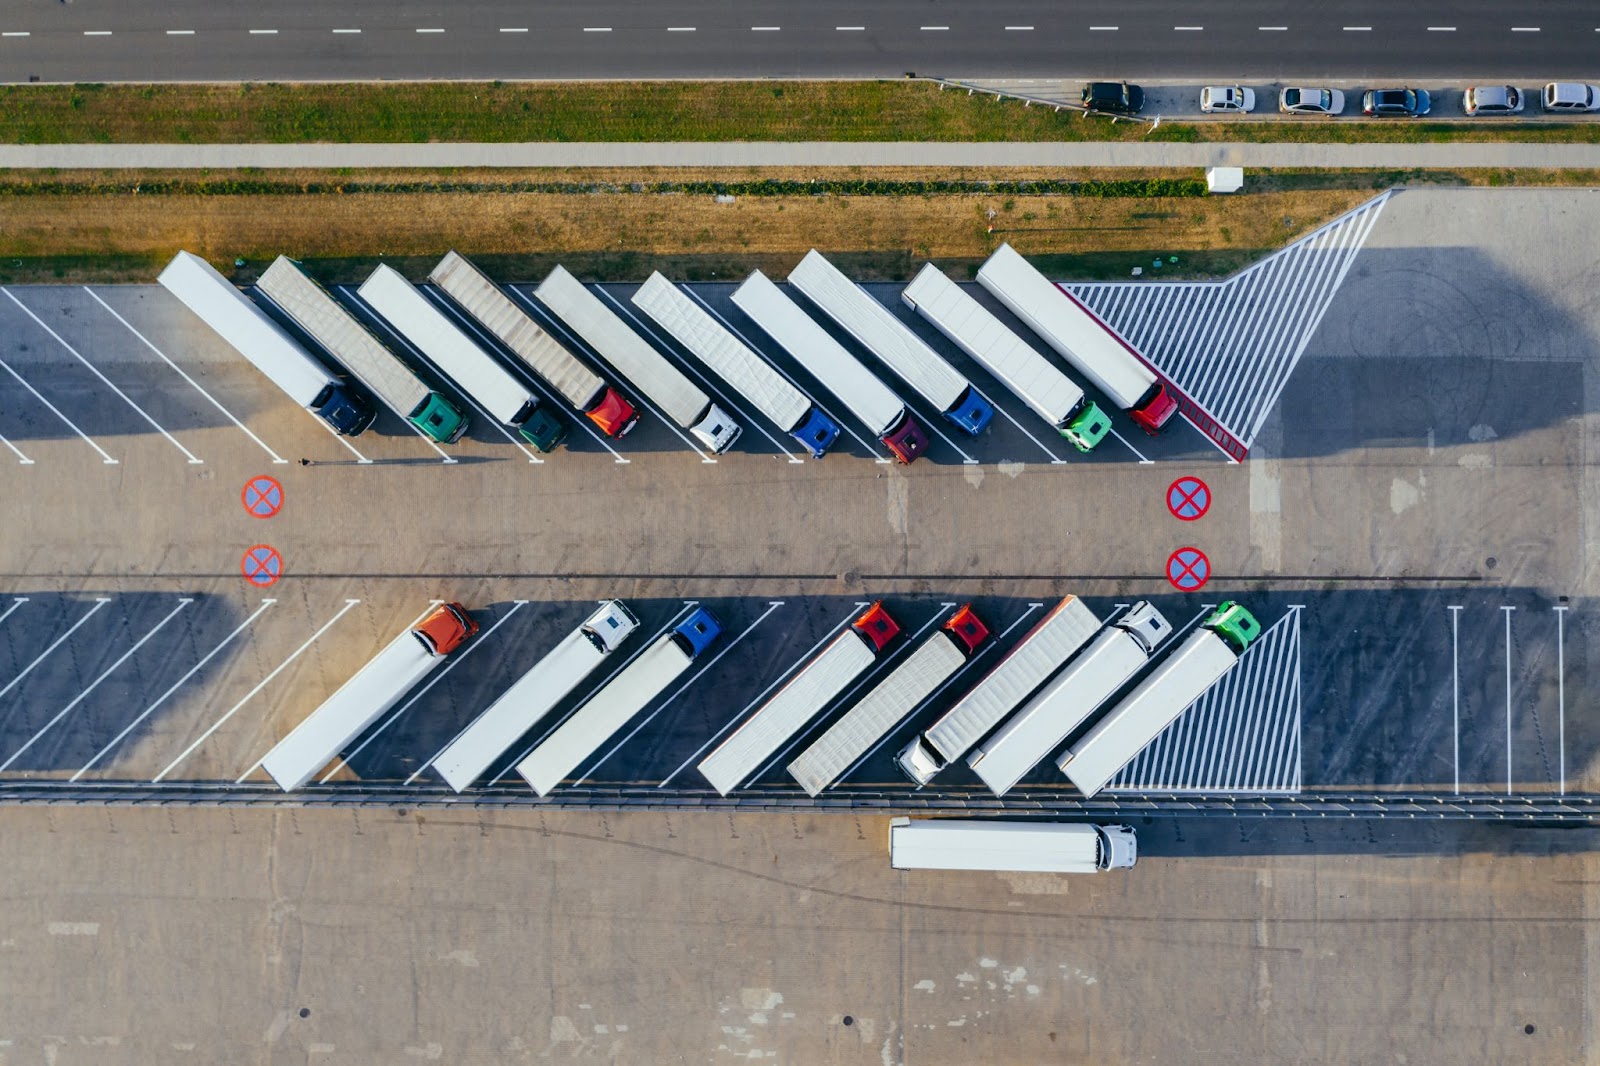 An aerial view of a fleet of semi-trucks in a parking lot